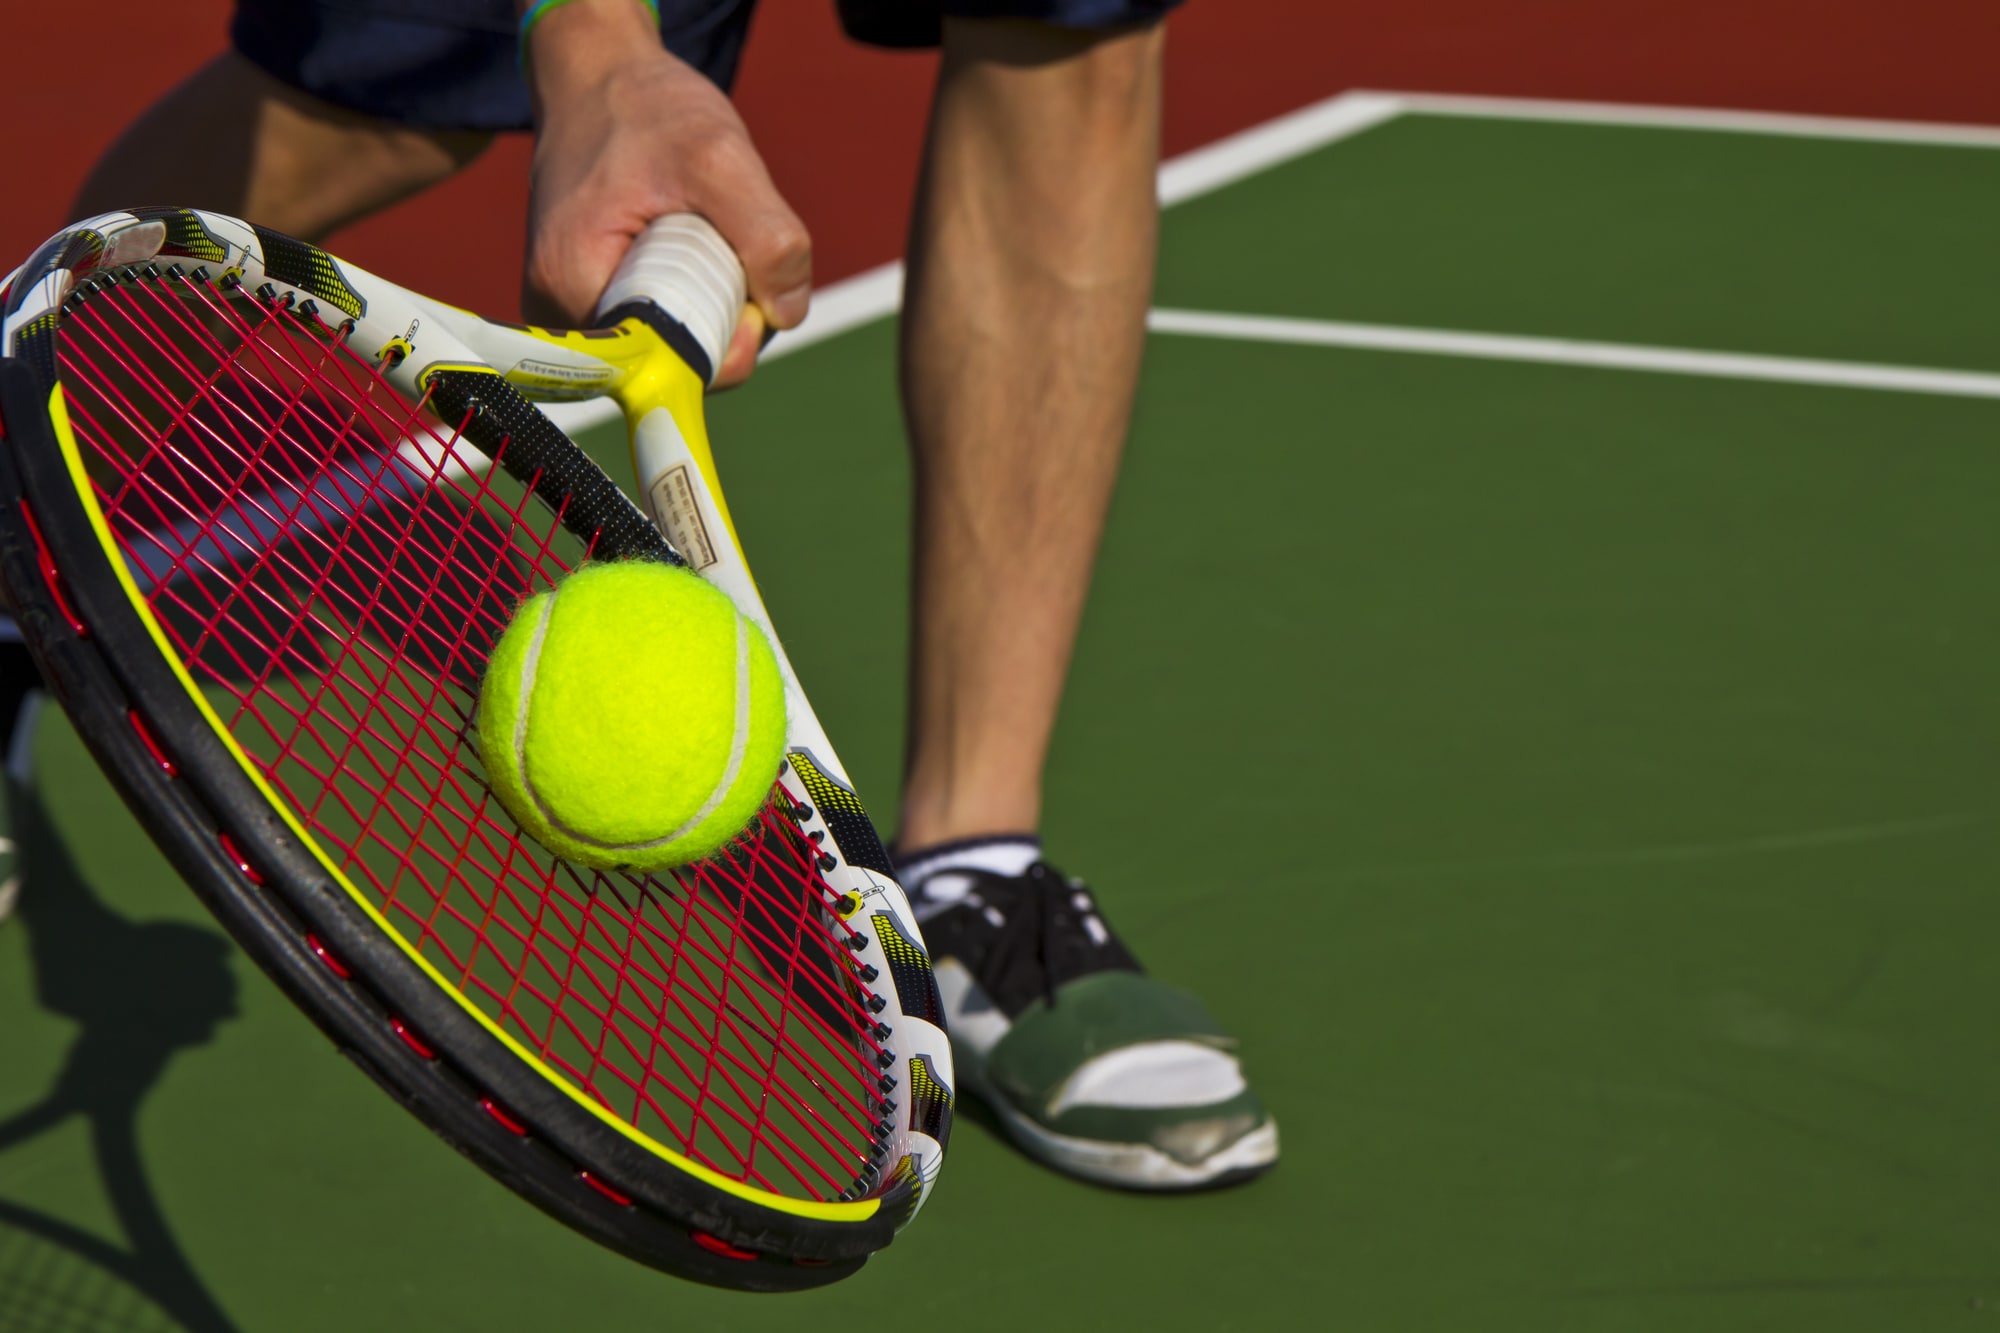 sunpro-tennis-programs-lessons-clinics